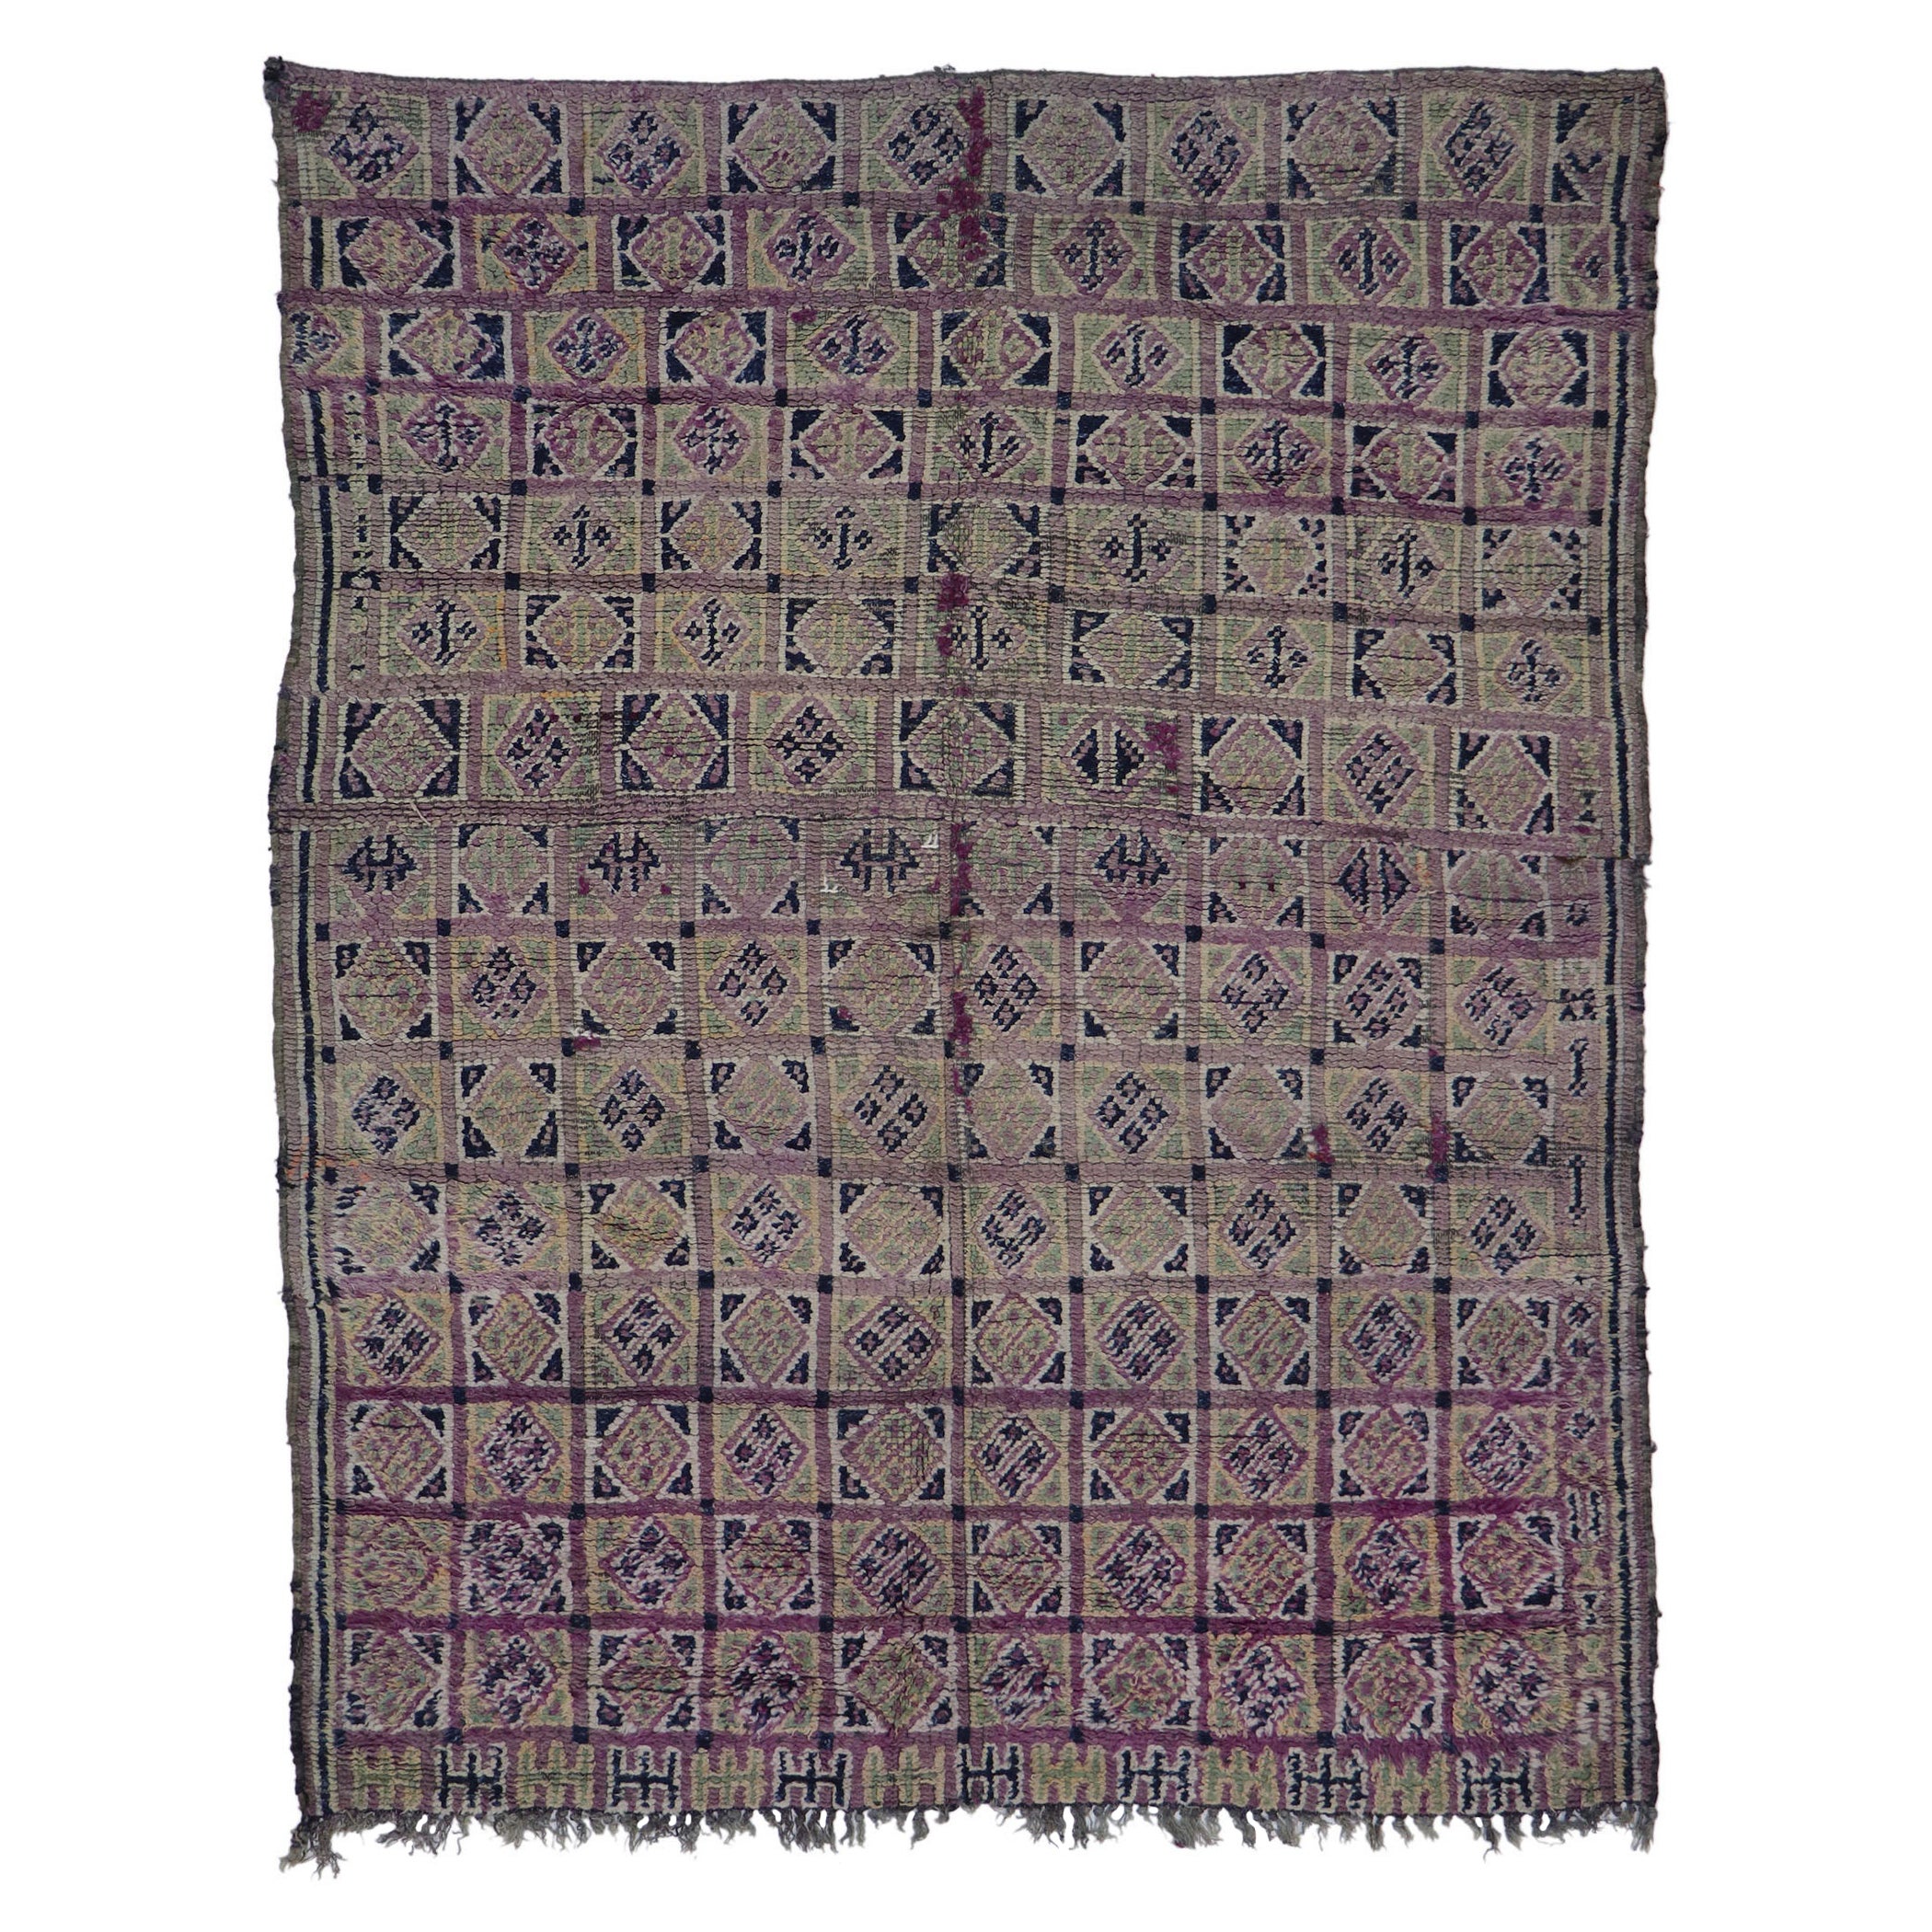 Vintage Berber Purple Moroccan Rug with Bohemian Tribal Style